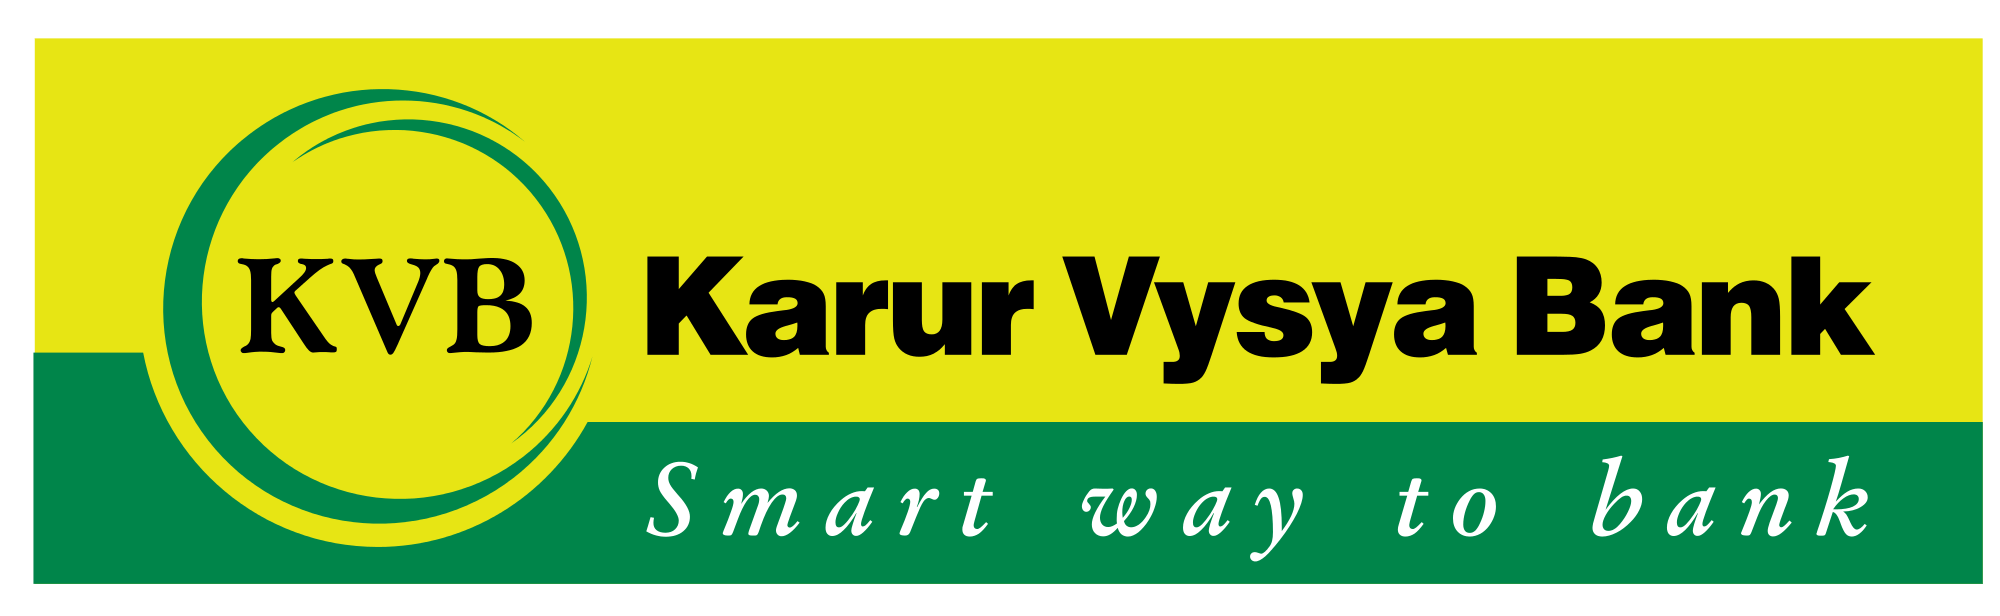 Green and Yellow Bank Logo - File:Karur Vysya Bank.svg - Wikimedia Commons